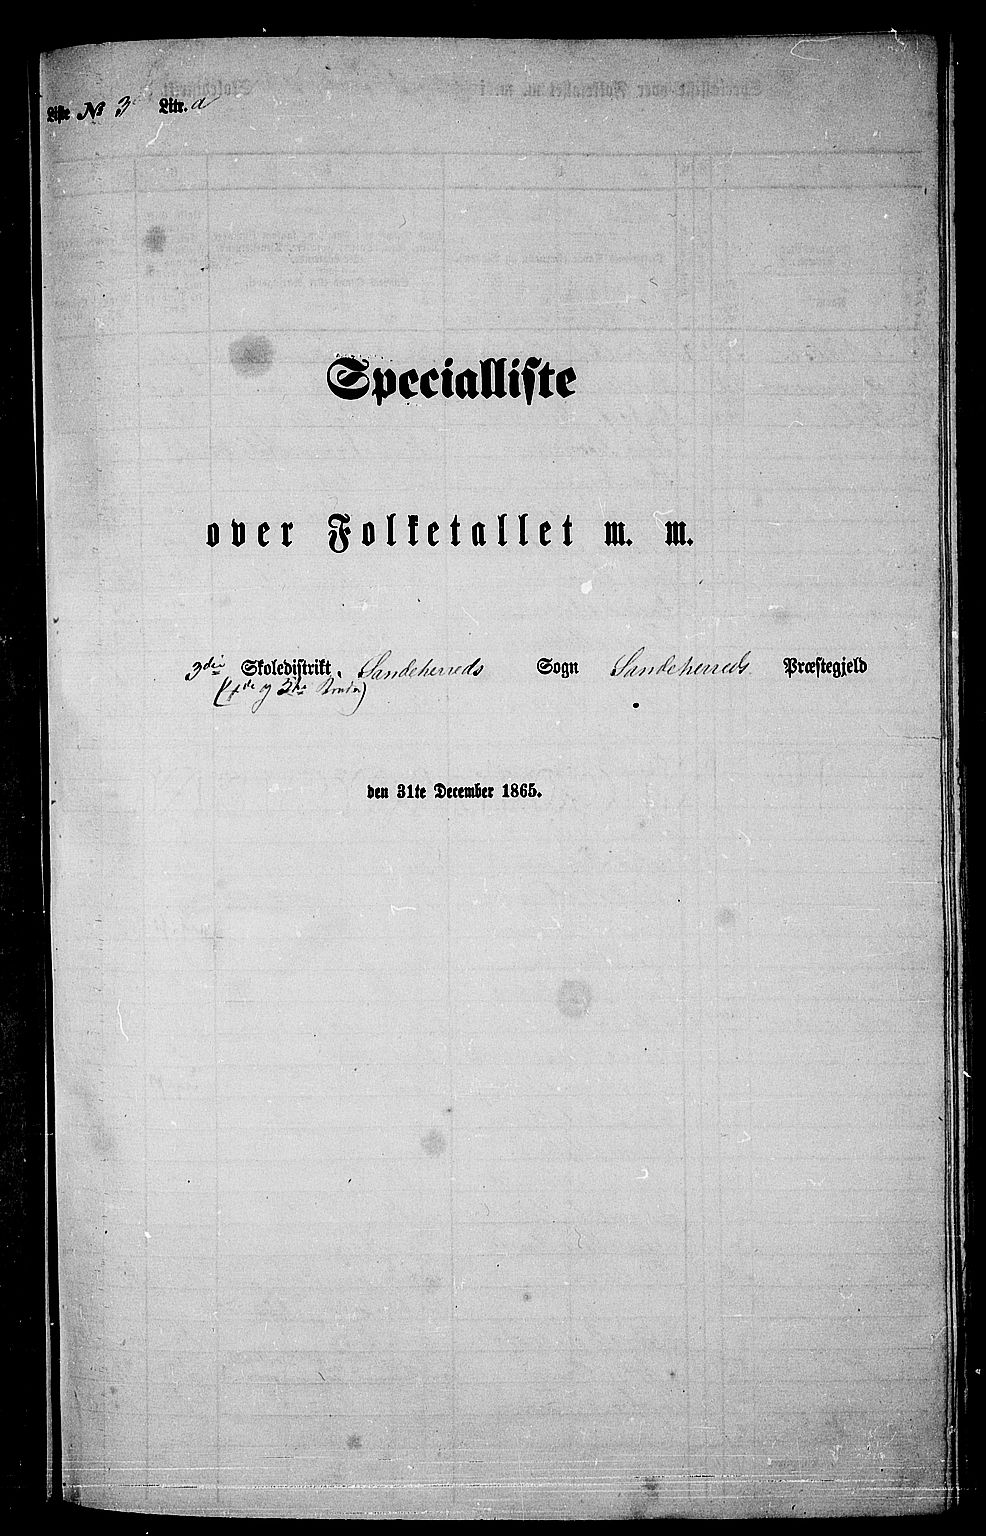 RA, Folketelling 1865 for 0724L Sandeherred prestegjeld, Sandeherred sokn, 1865, s. 75